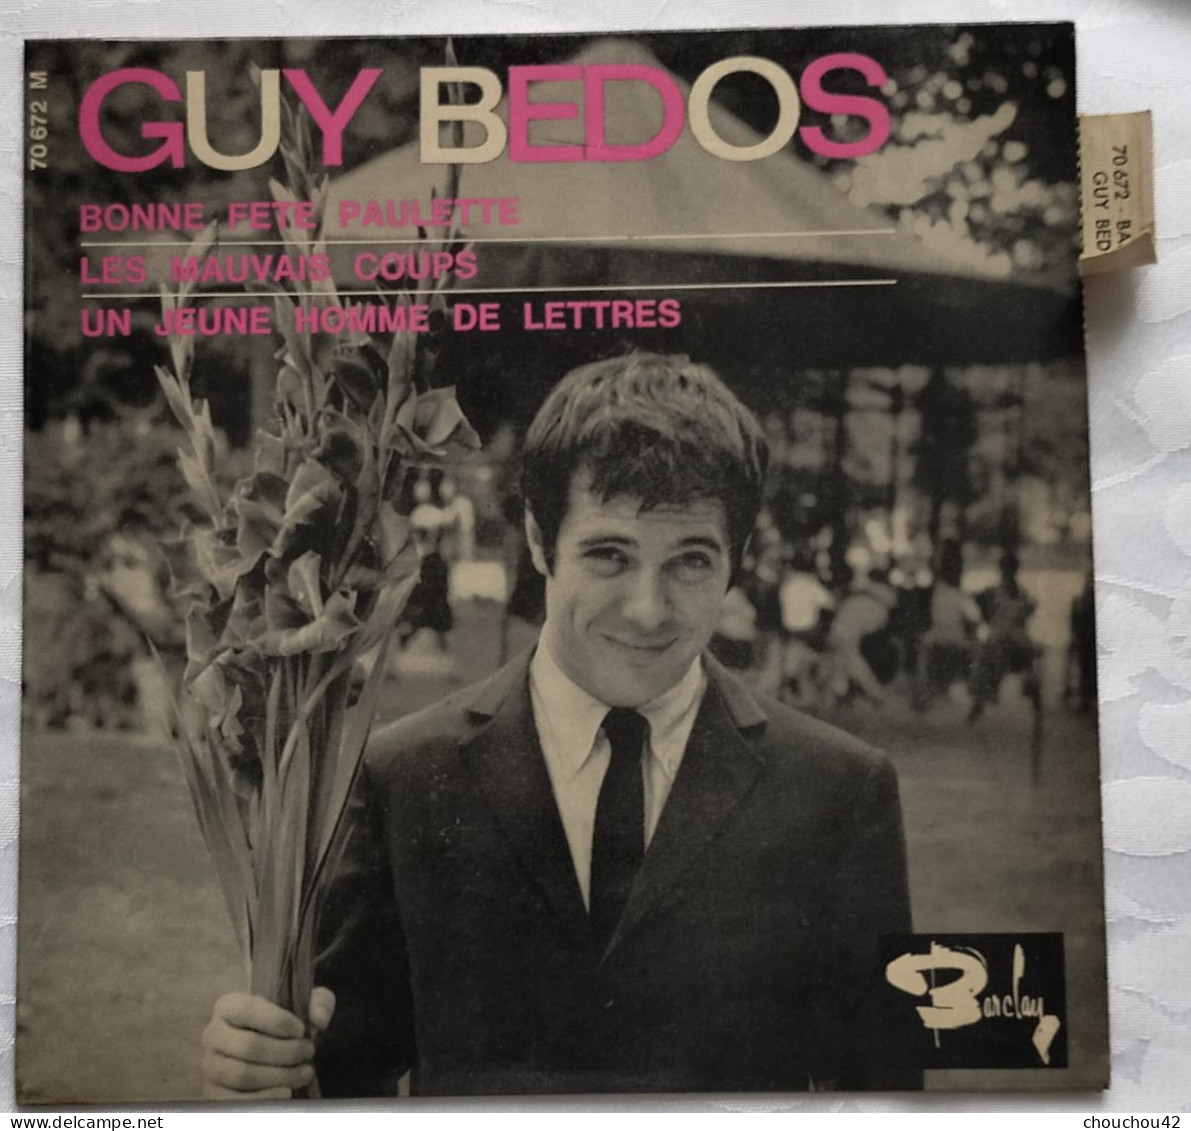 Guy Bedos - Comiques, Cabaret